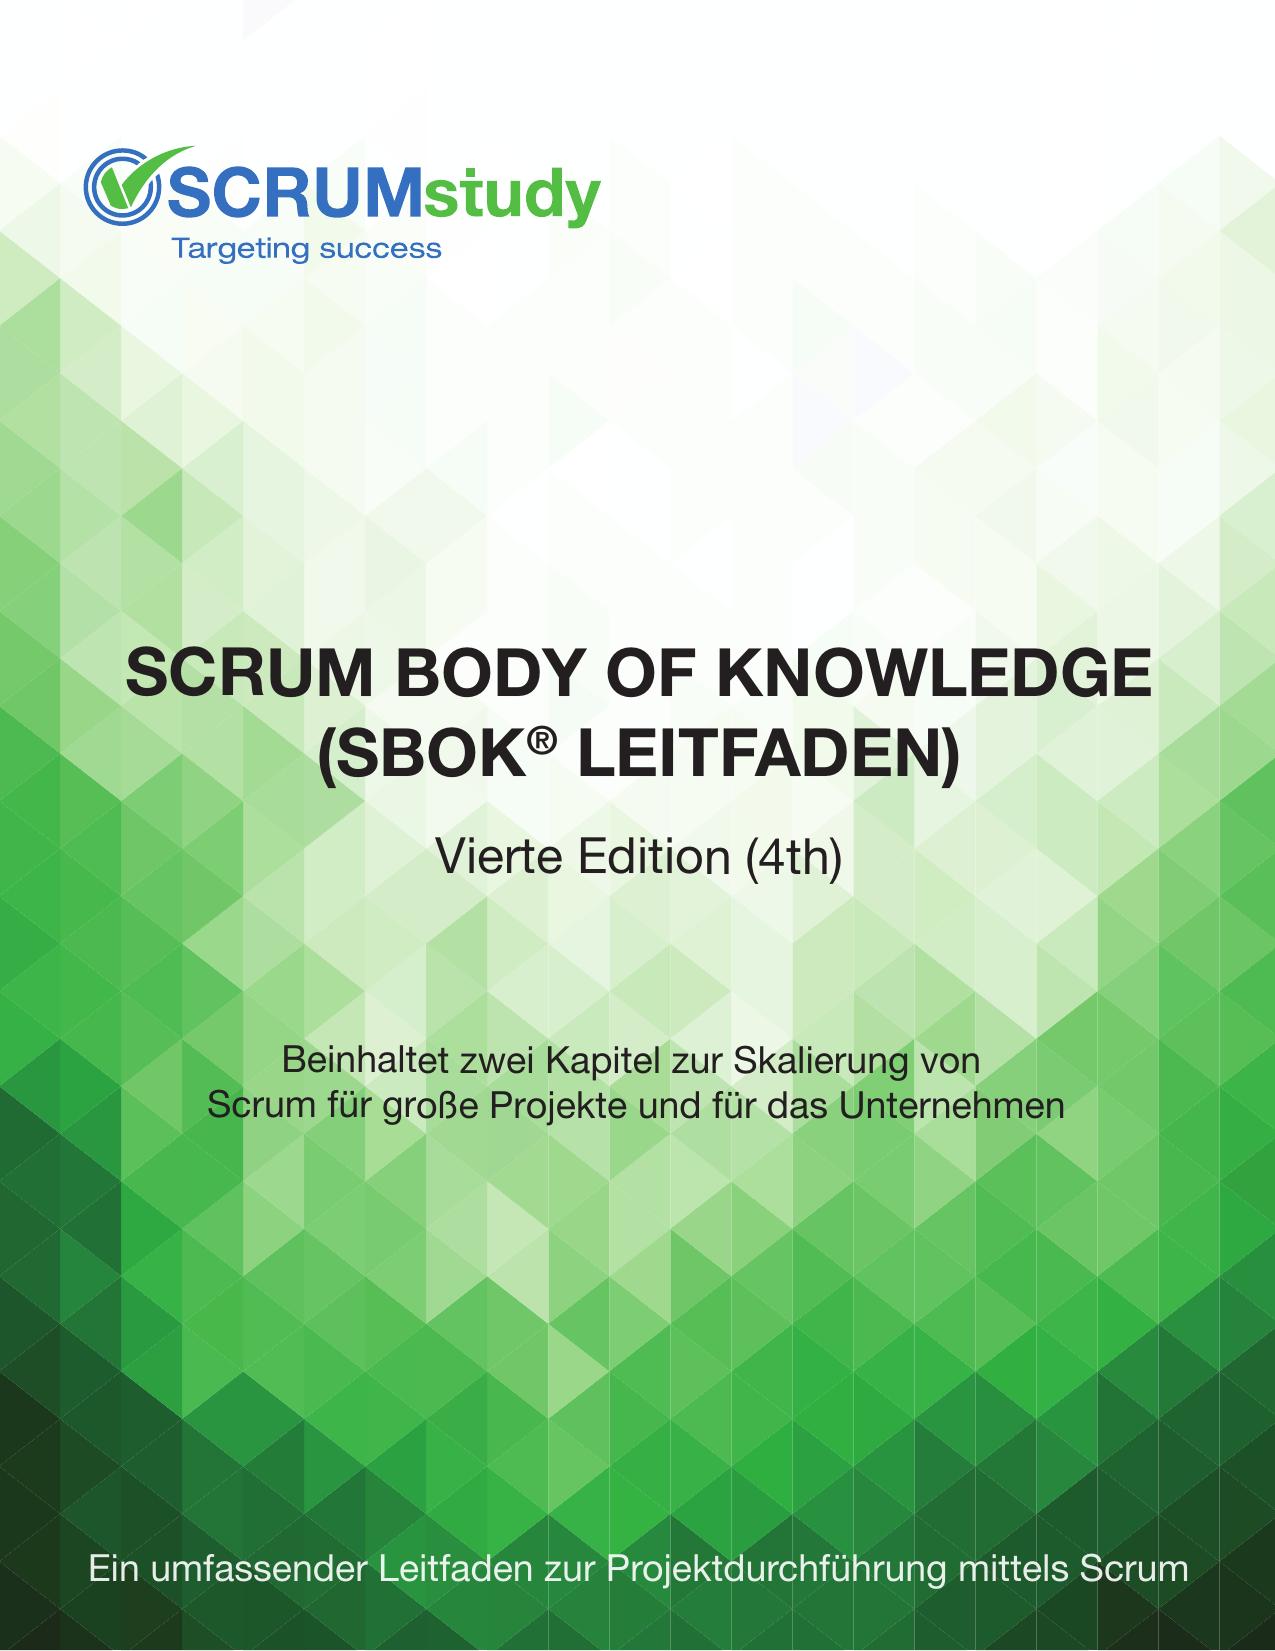 SCRUM Body of Knowledge (SBOK® Leitfaden) Vierte Edition (4th)